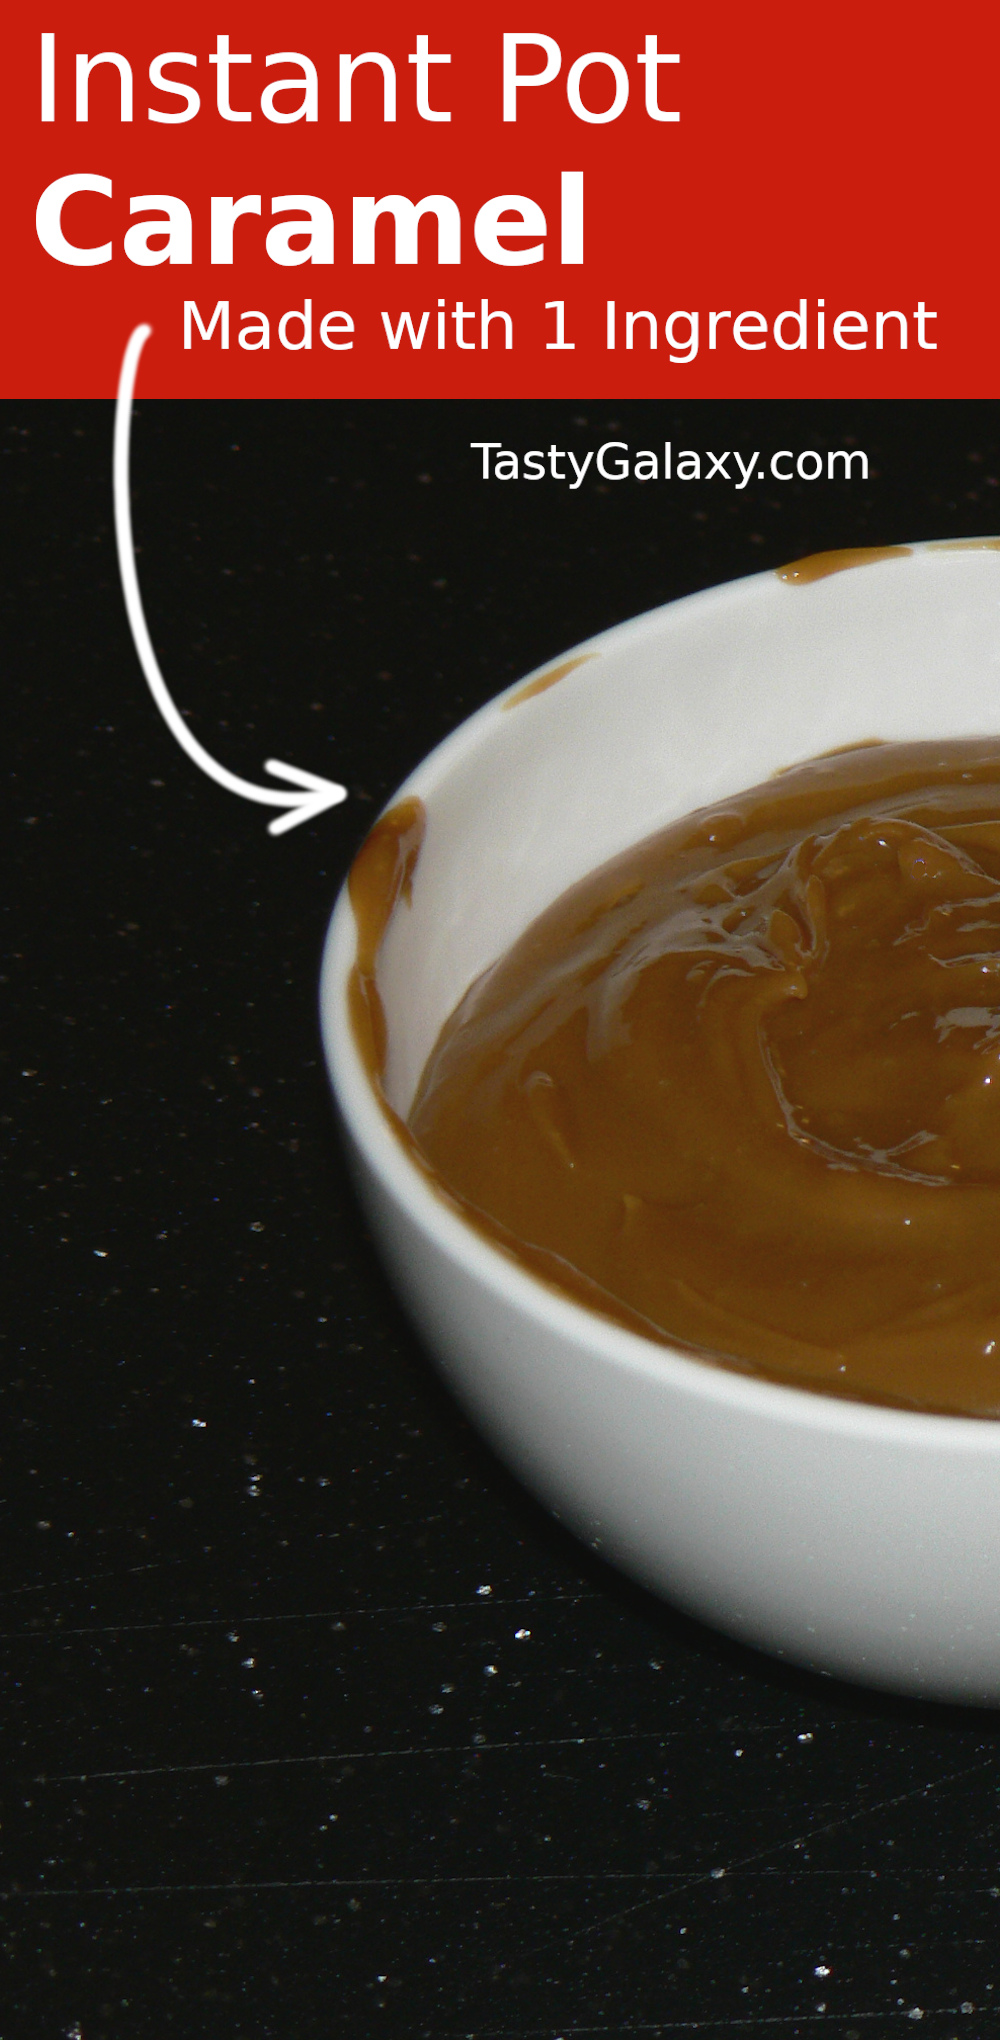 Instant Pot Caramel in a Bowl